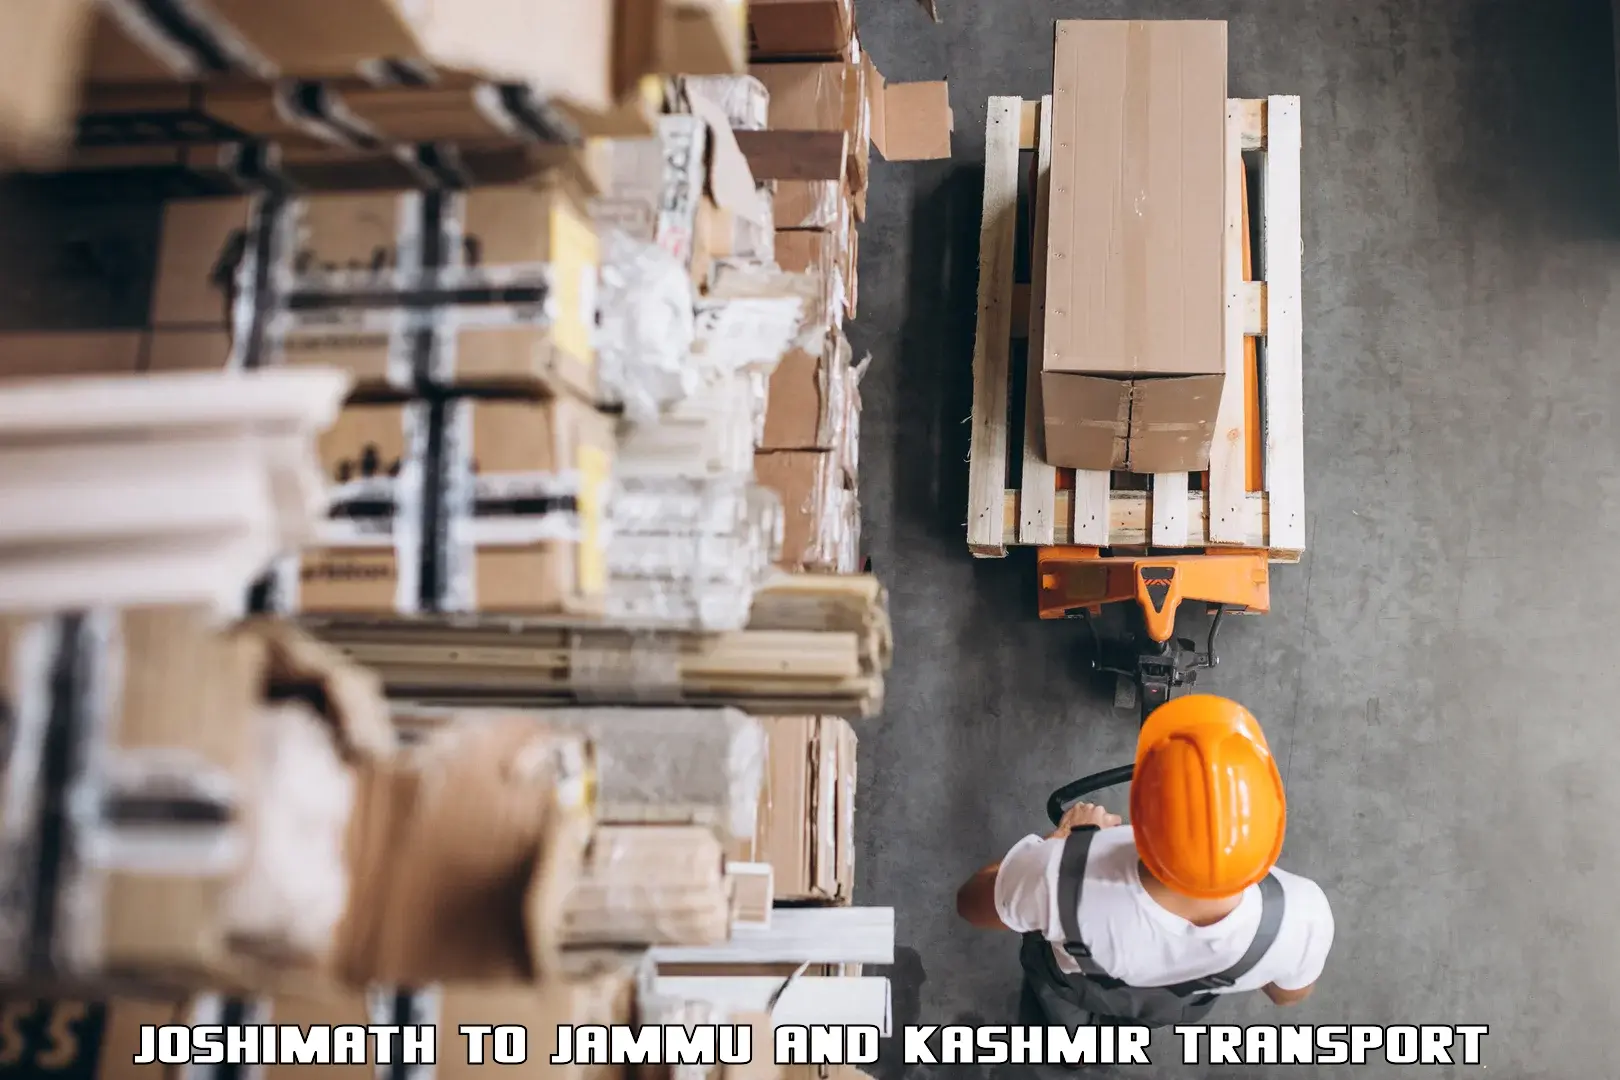 Shipping partner Joshimath to Srinagar Kashmir